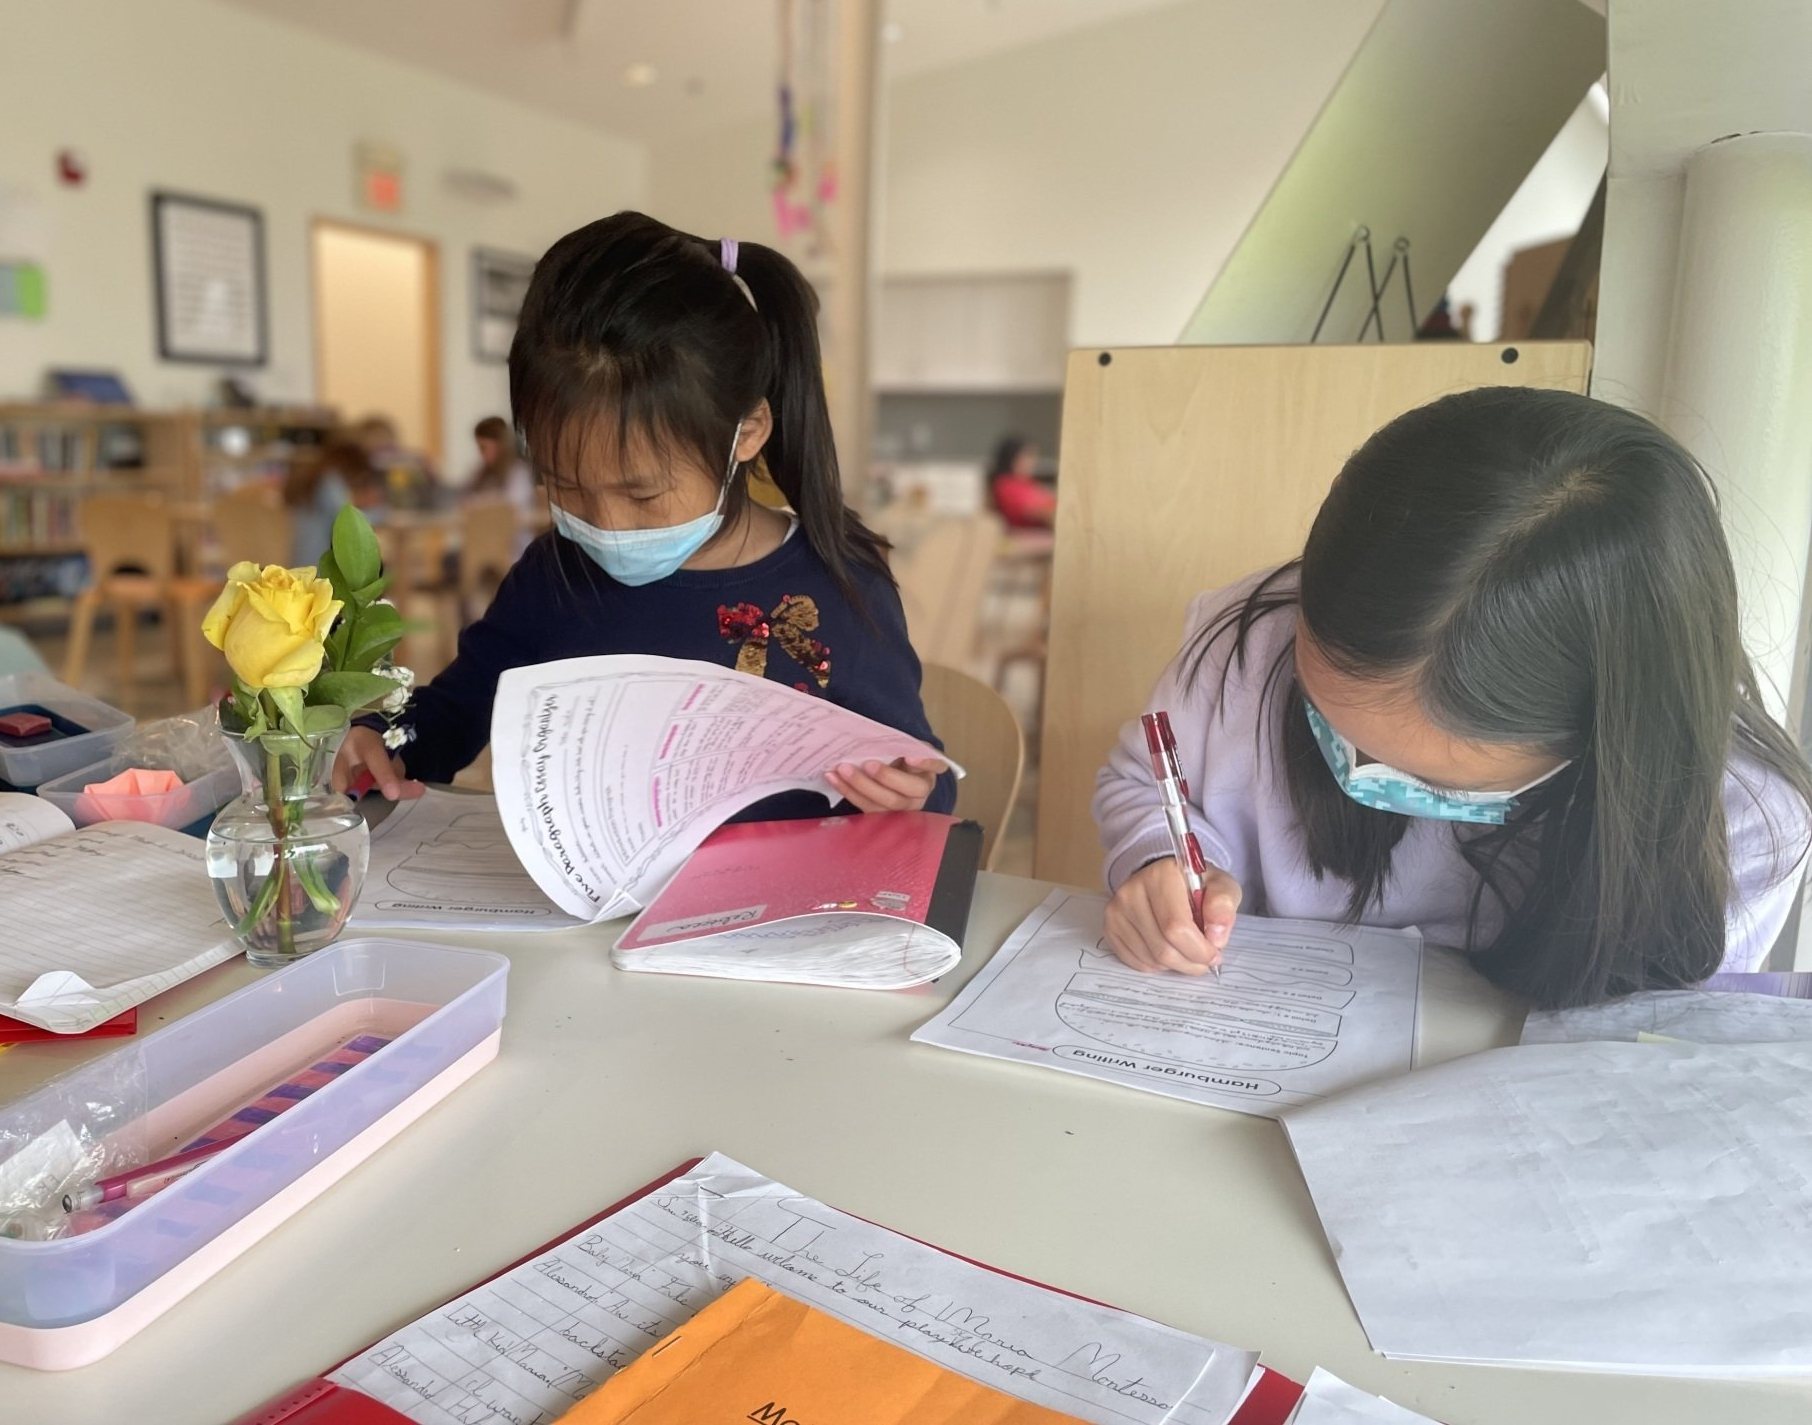 Montessori children working in the classroom